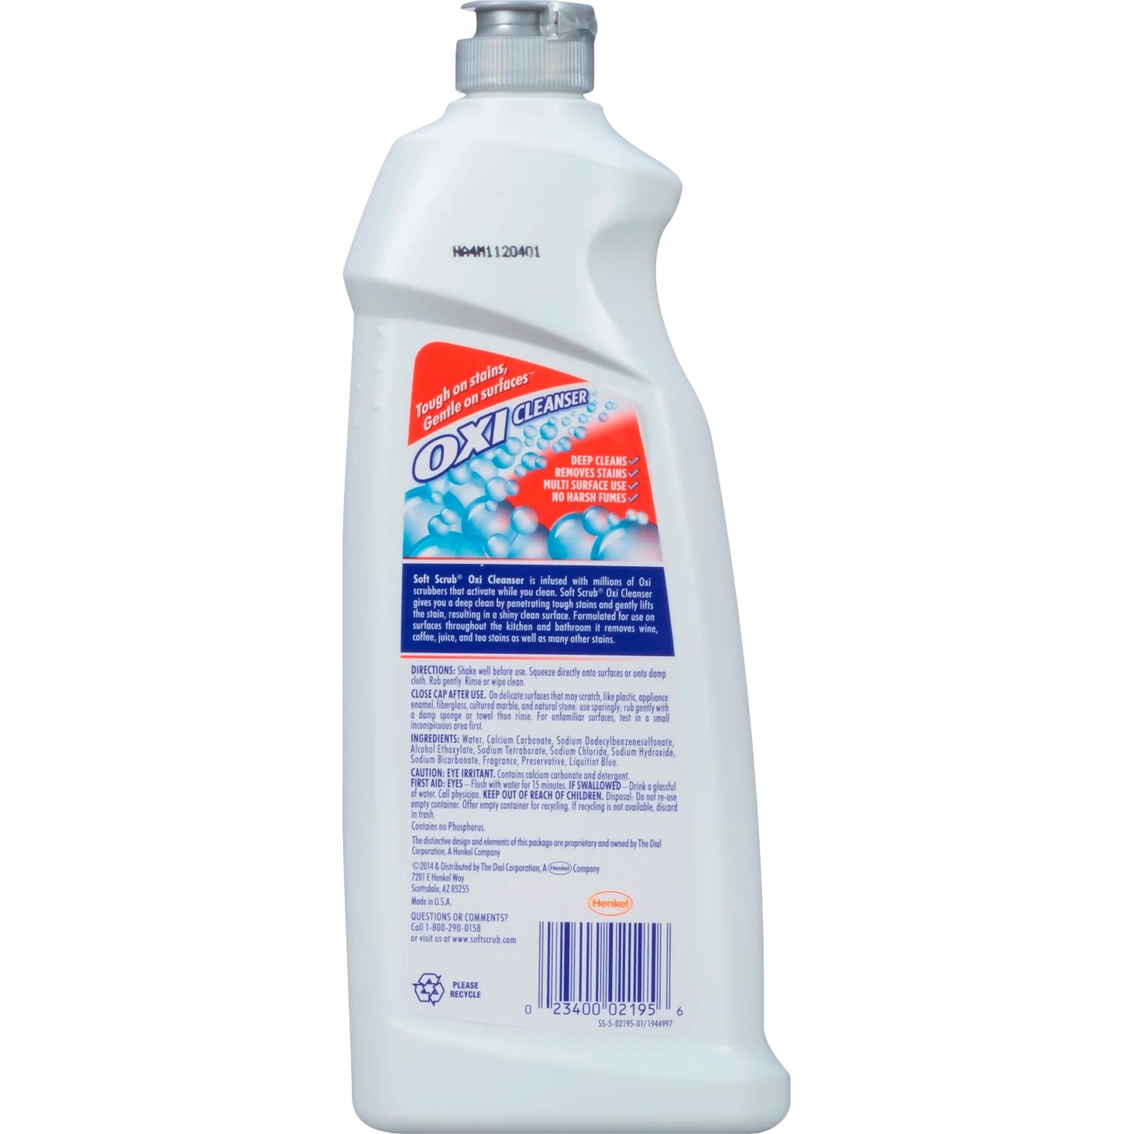 Soft Scrub Oxi Cleanser 24 oz. Bottle - Image 2 of 4